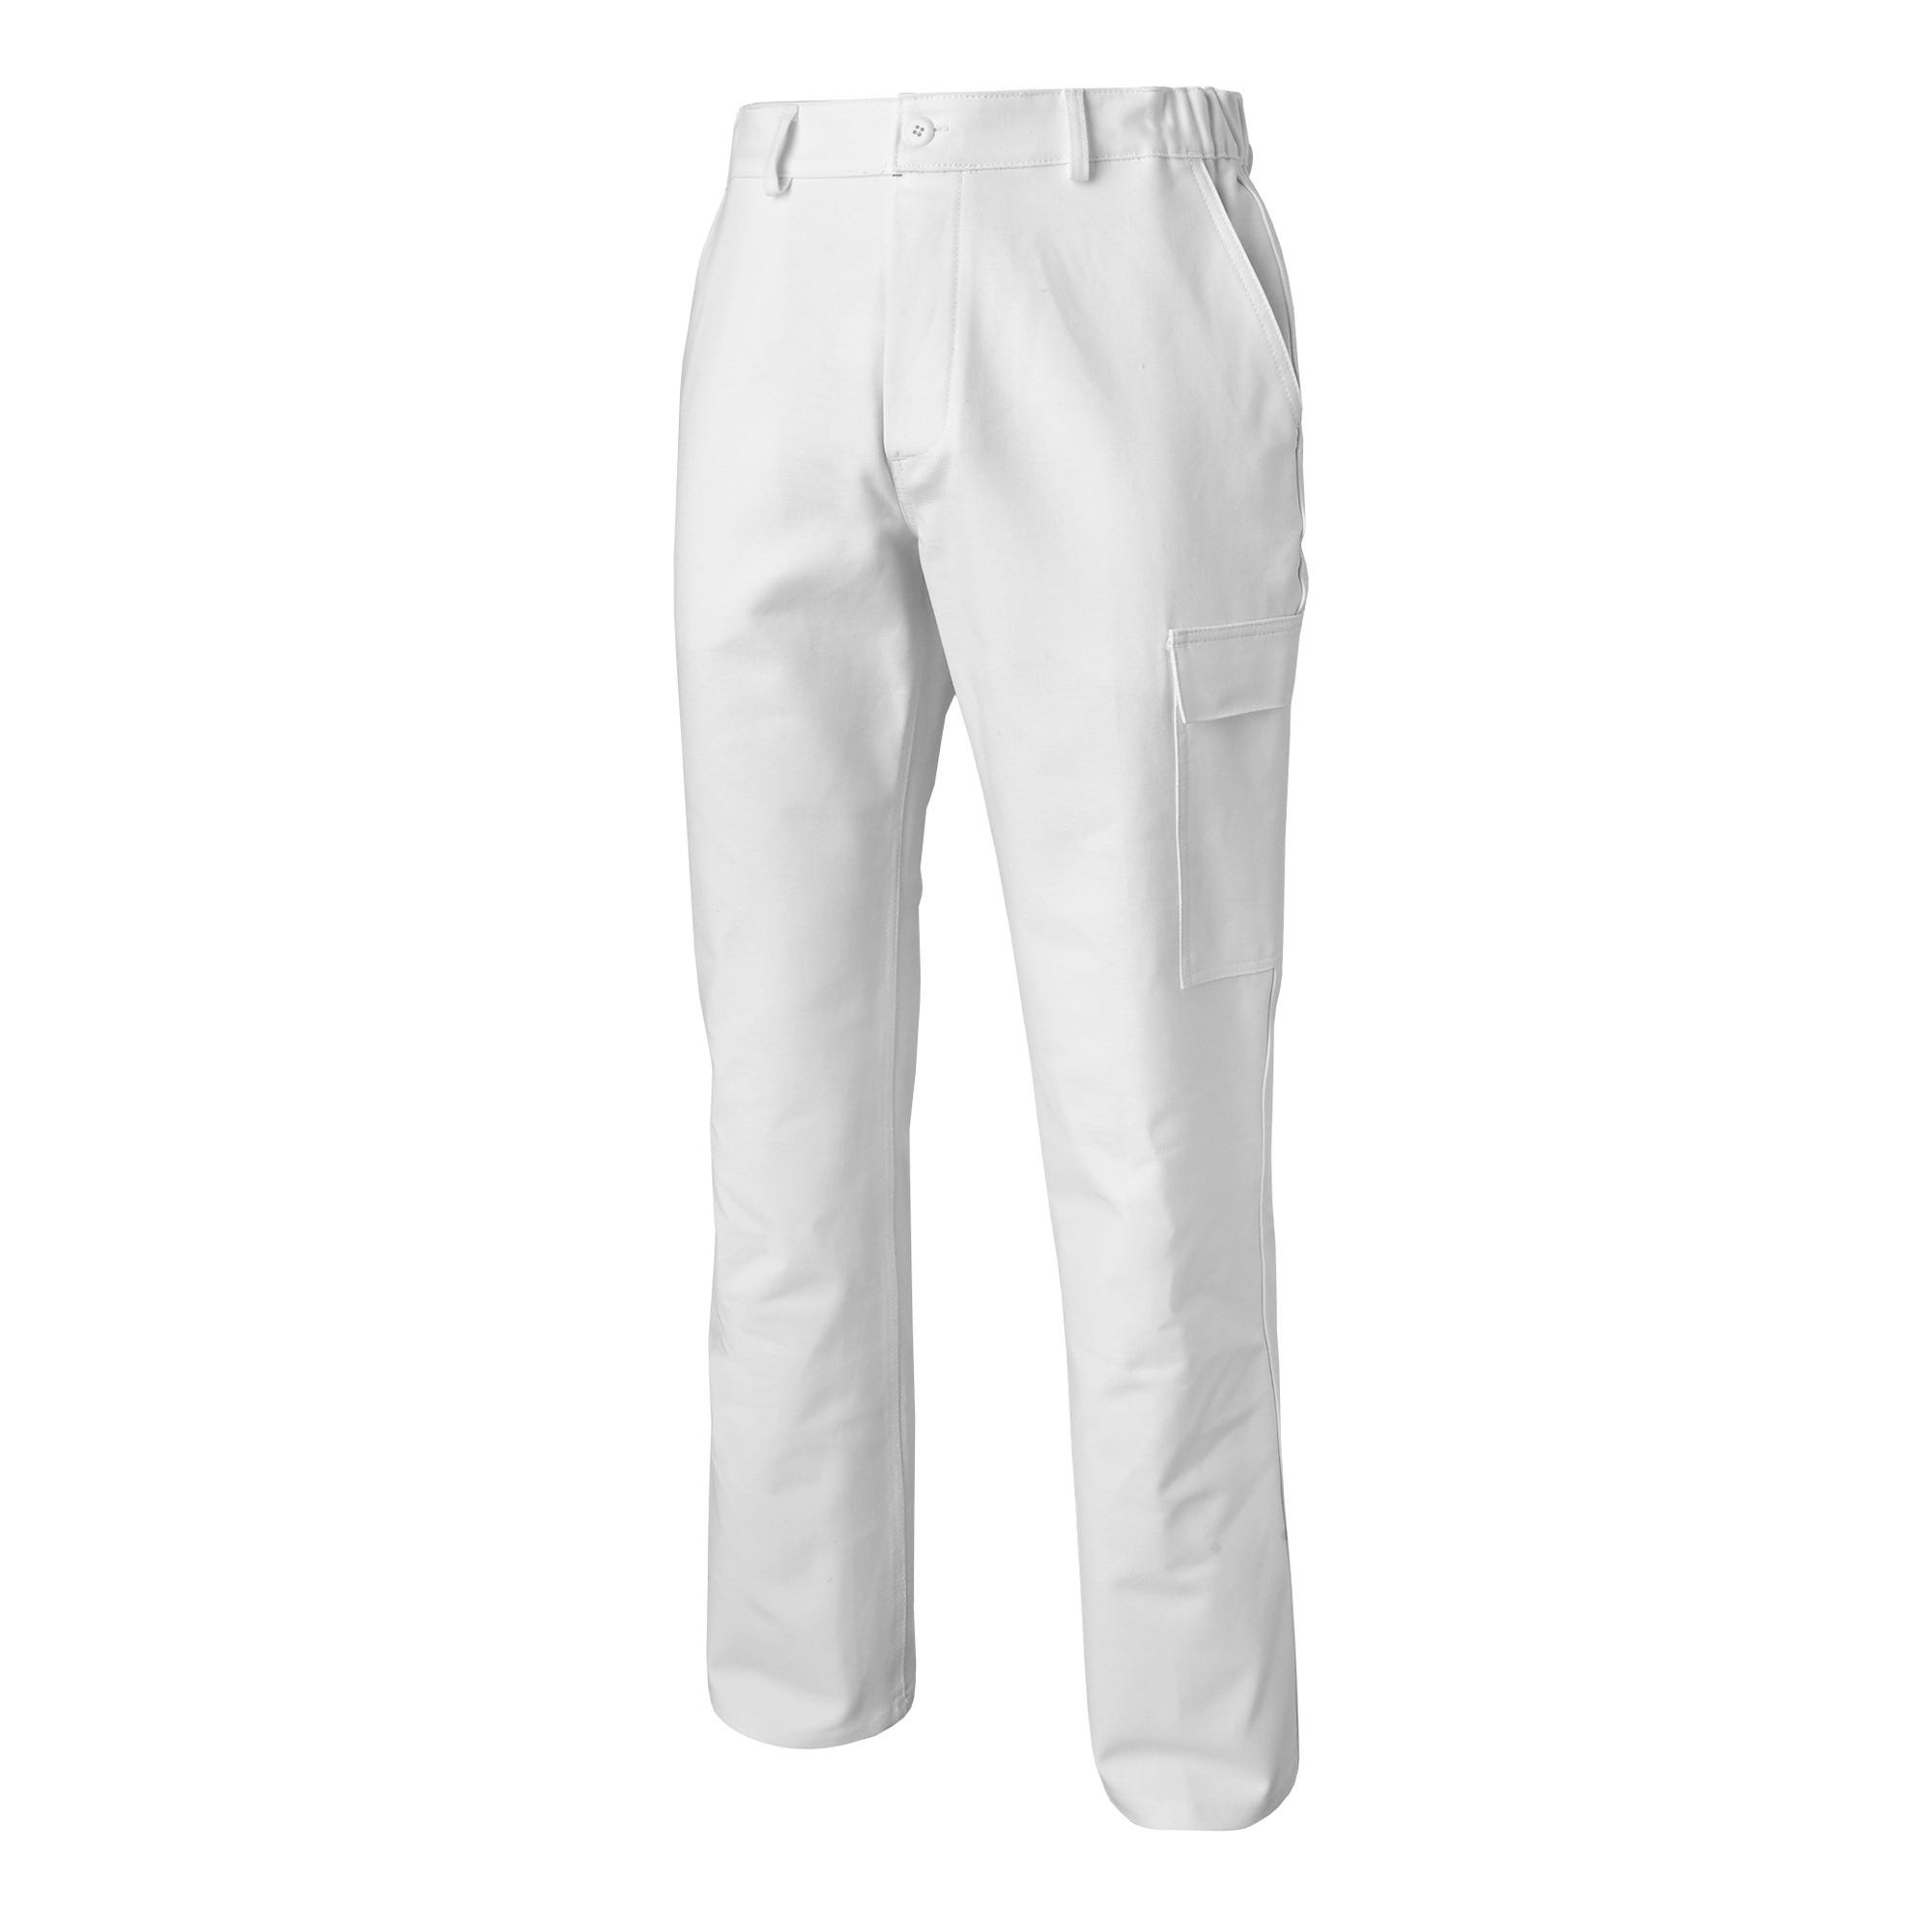 Pantalon de travail Blanc T.6 New pilote - MOLINEL 1